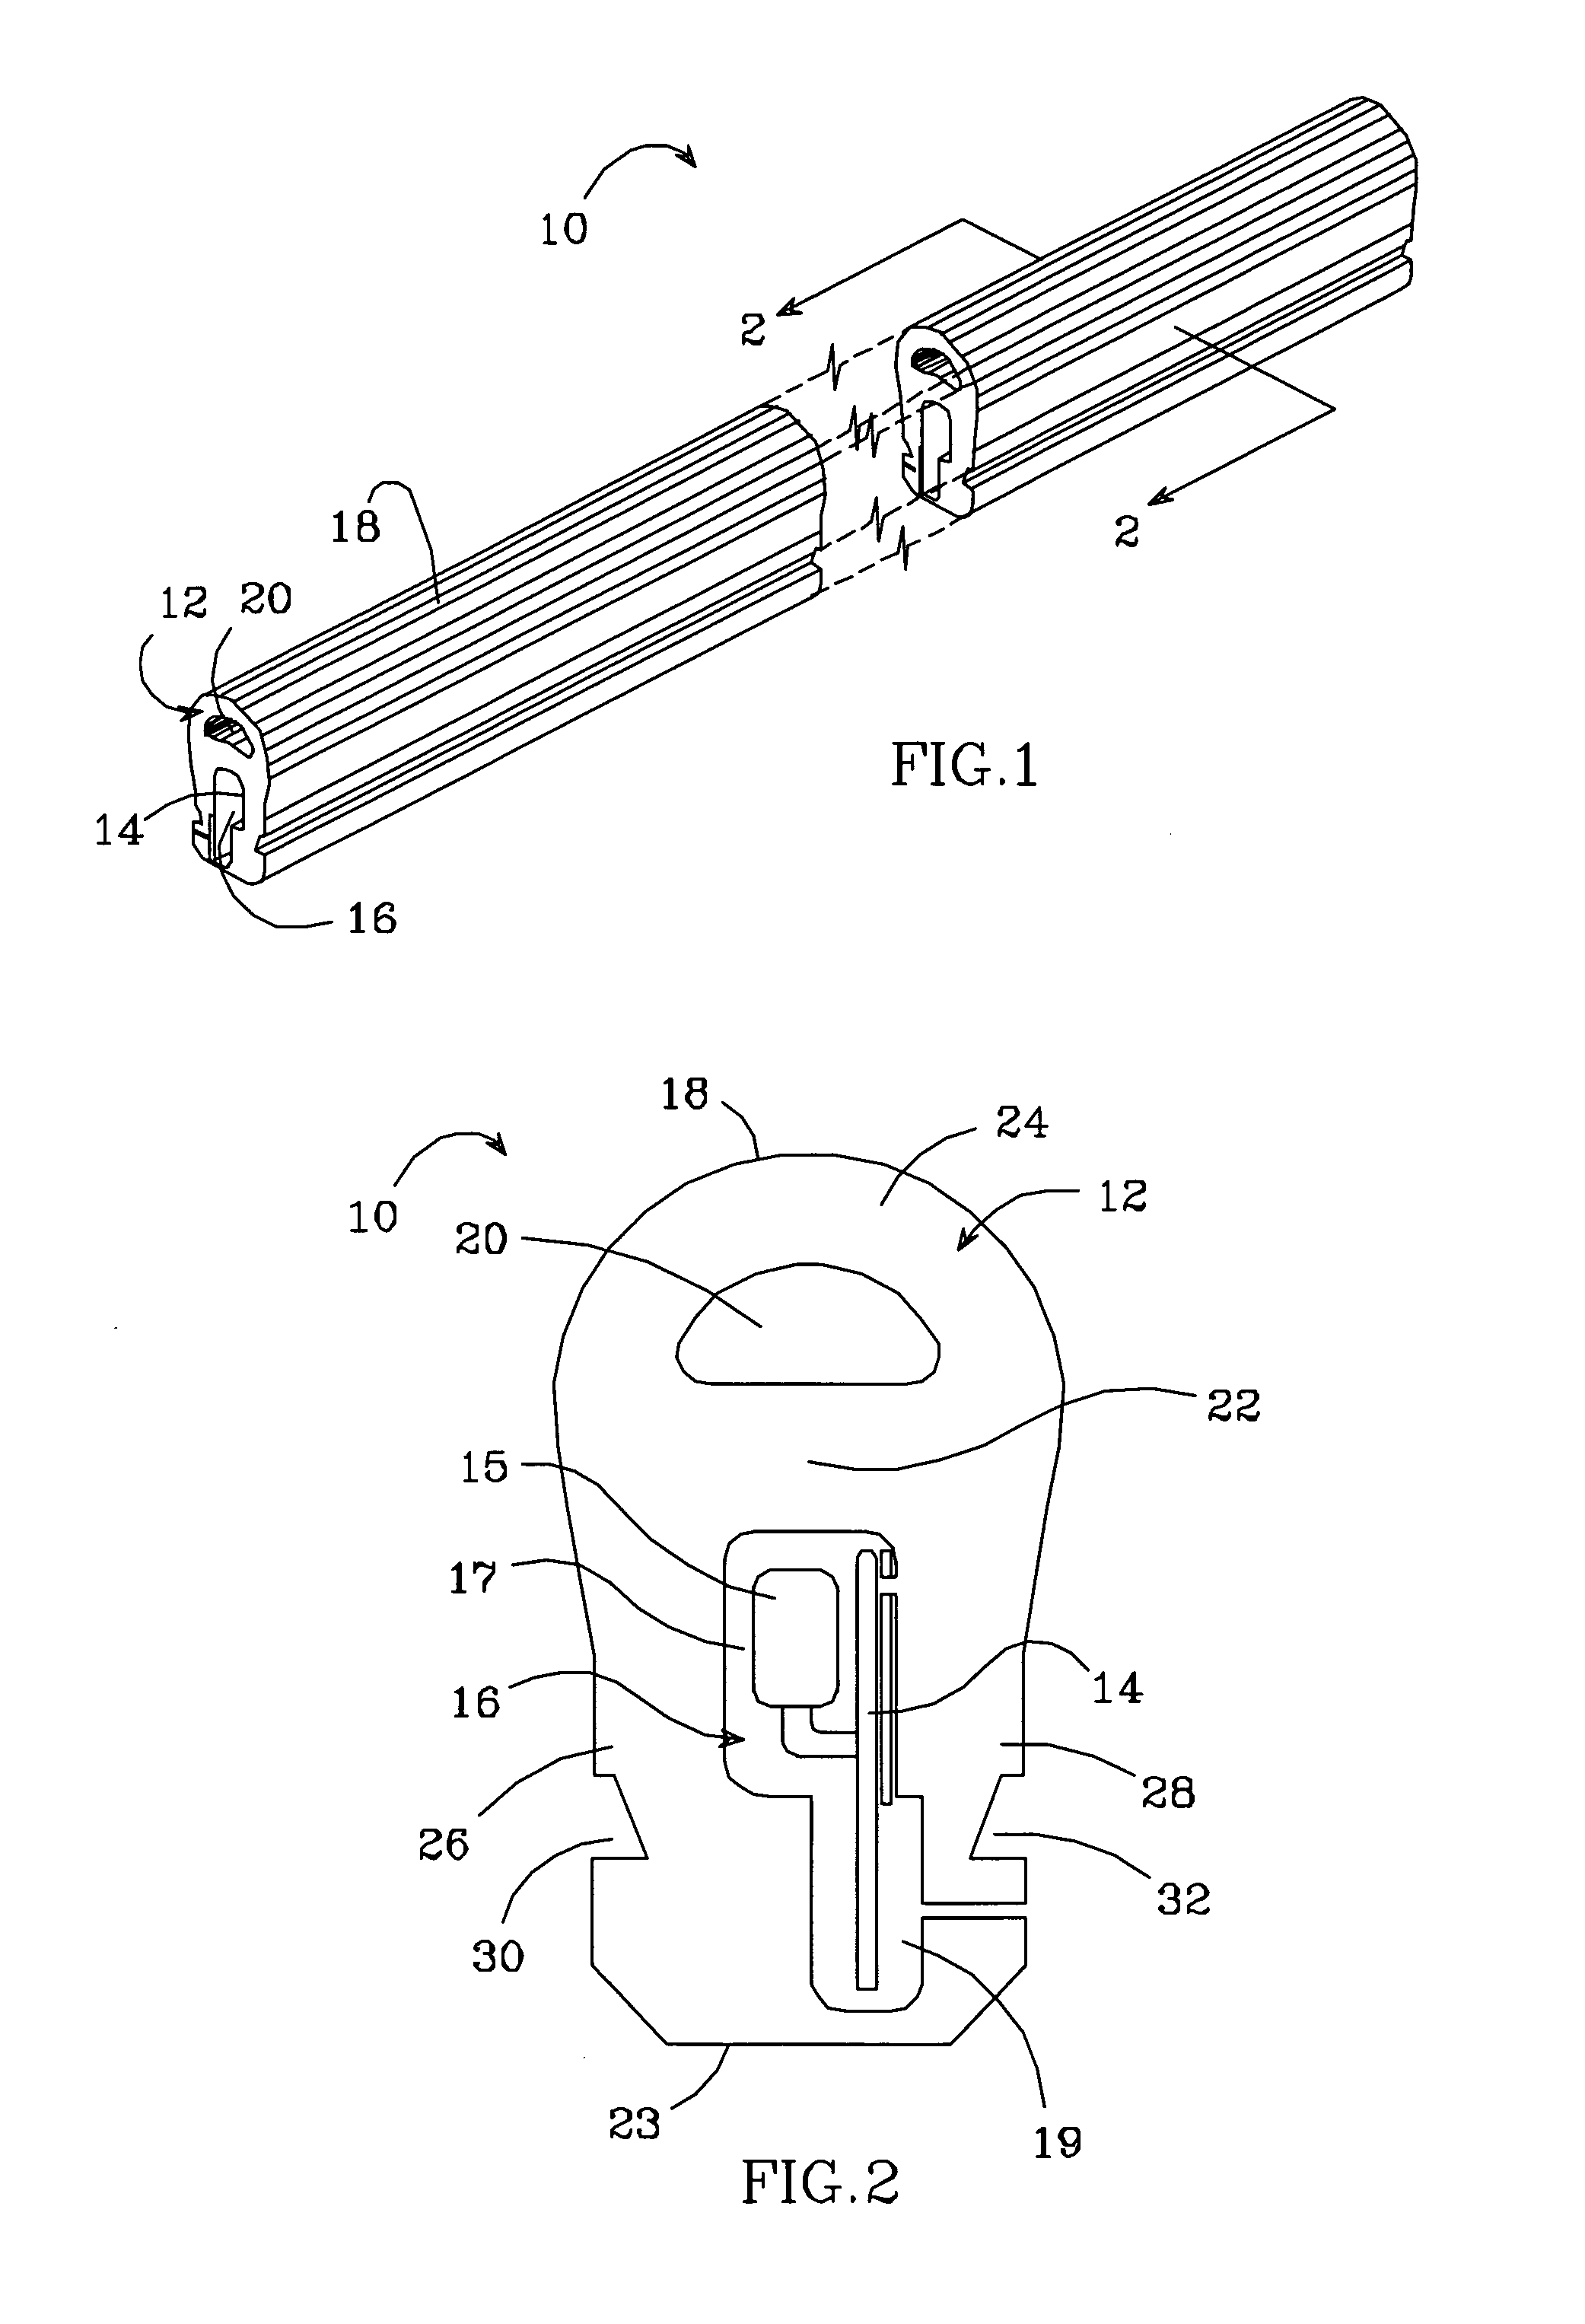 Flexible perimeter lighting apparatus